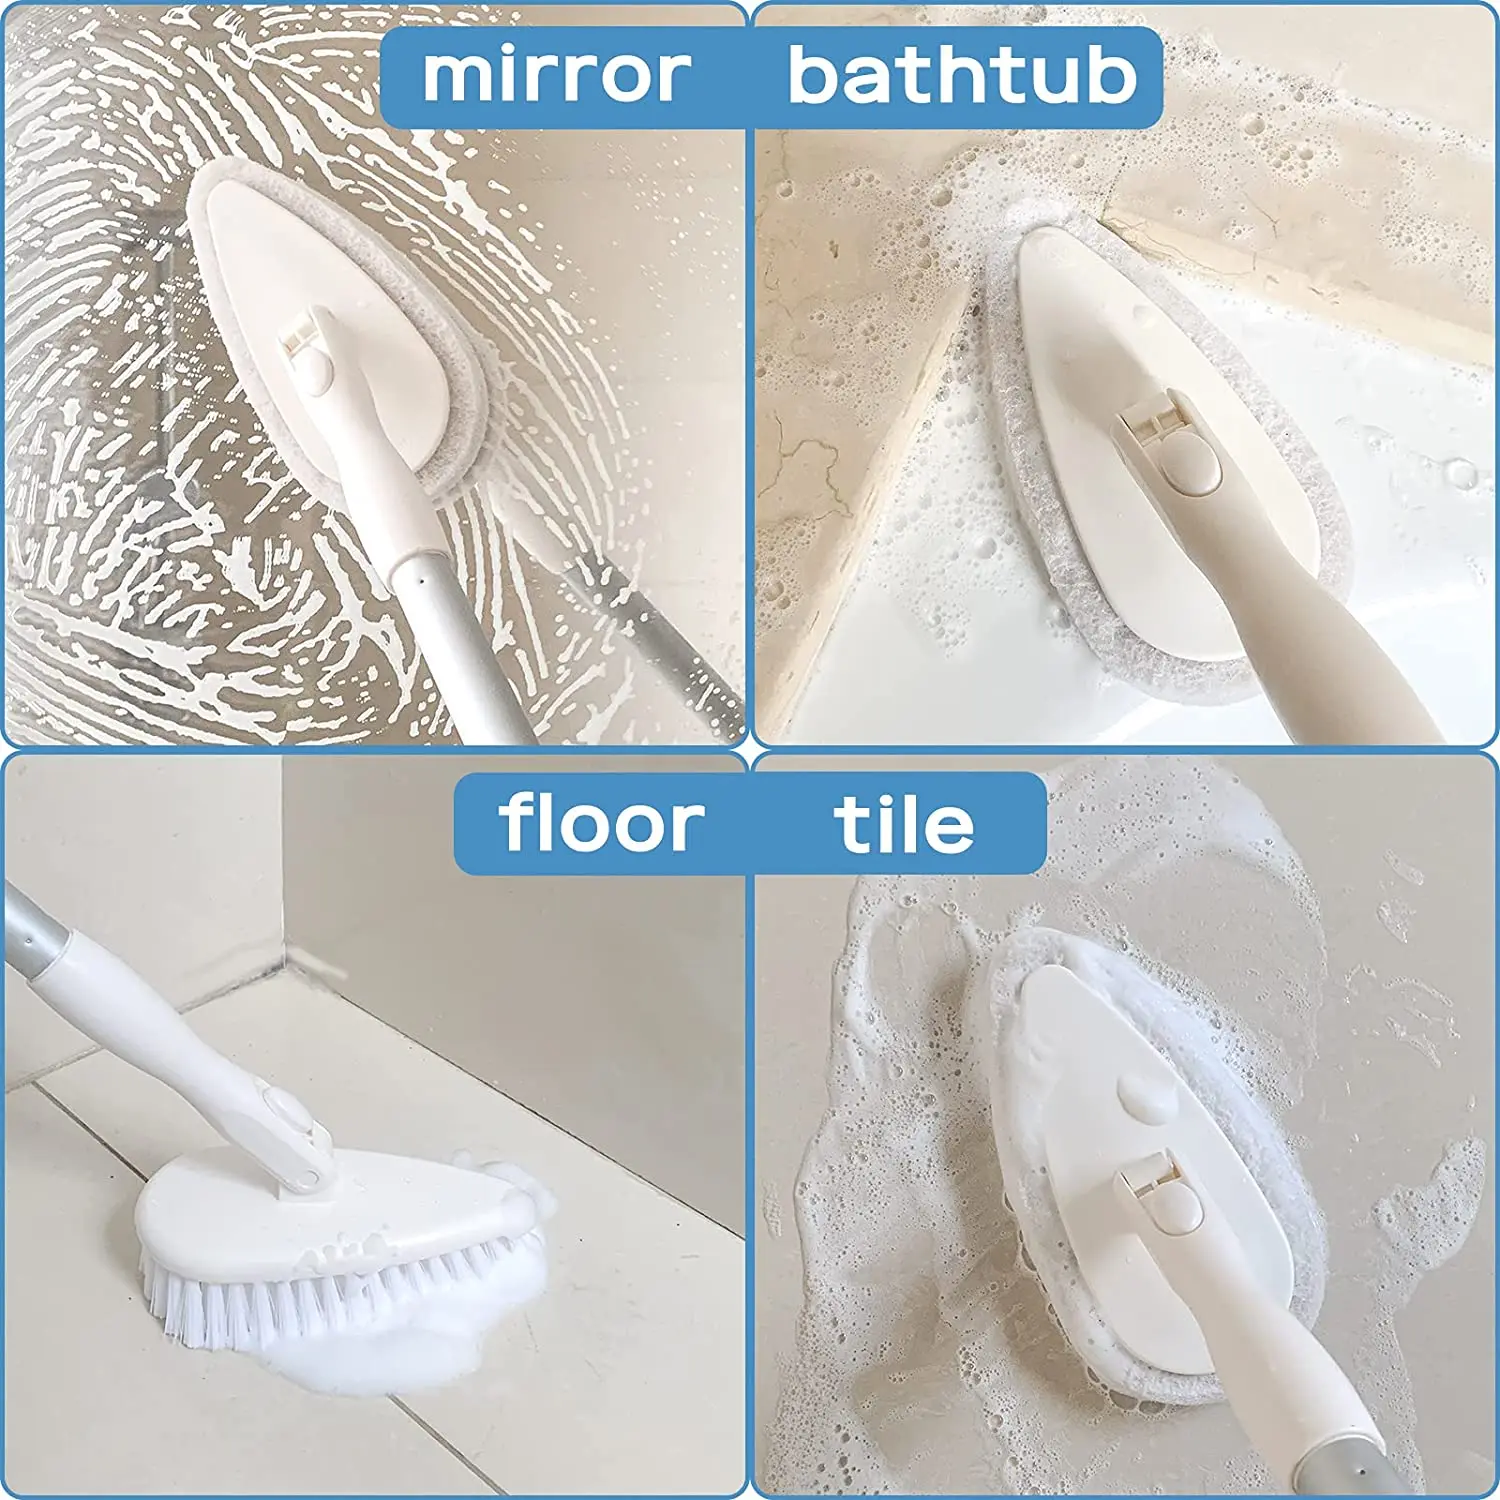 Qaestfy Shower Bathtub Tile Scrubber Brush with Extendable Aluminum Long  Handle for Bathroom Wall Floor Scrubbing 